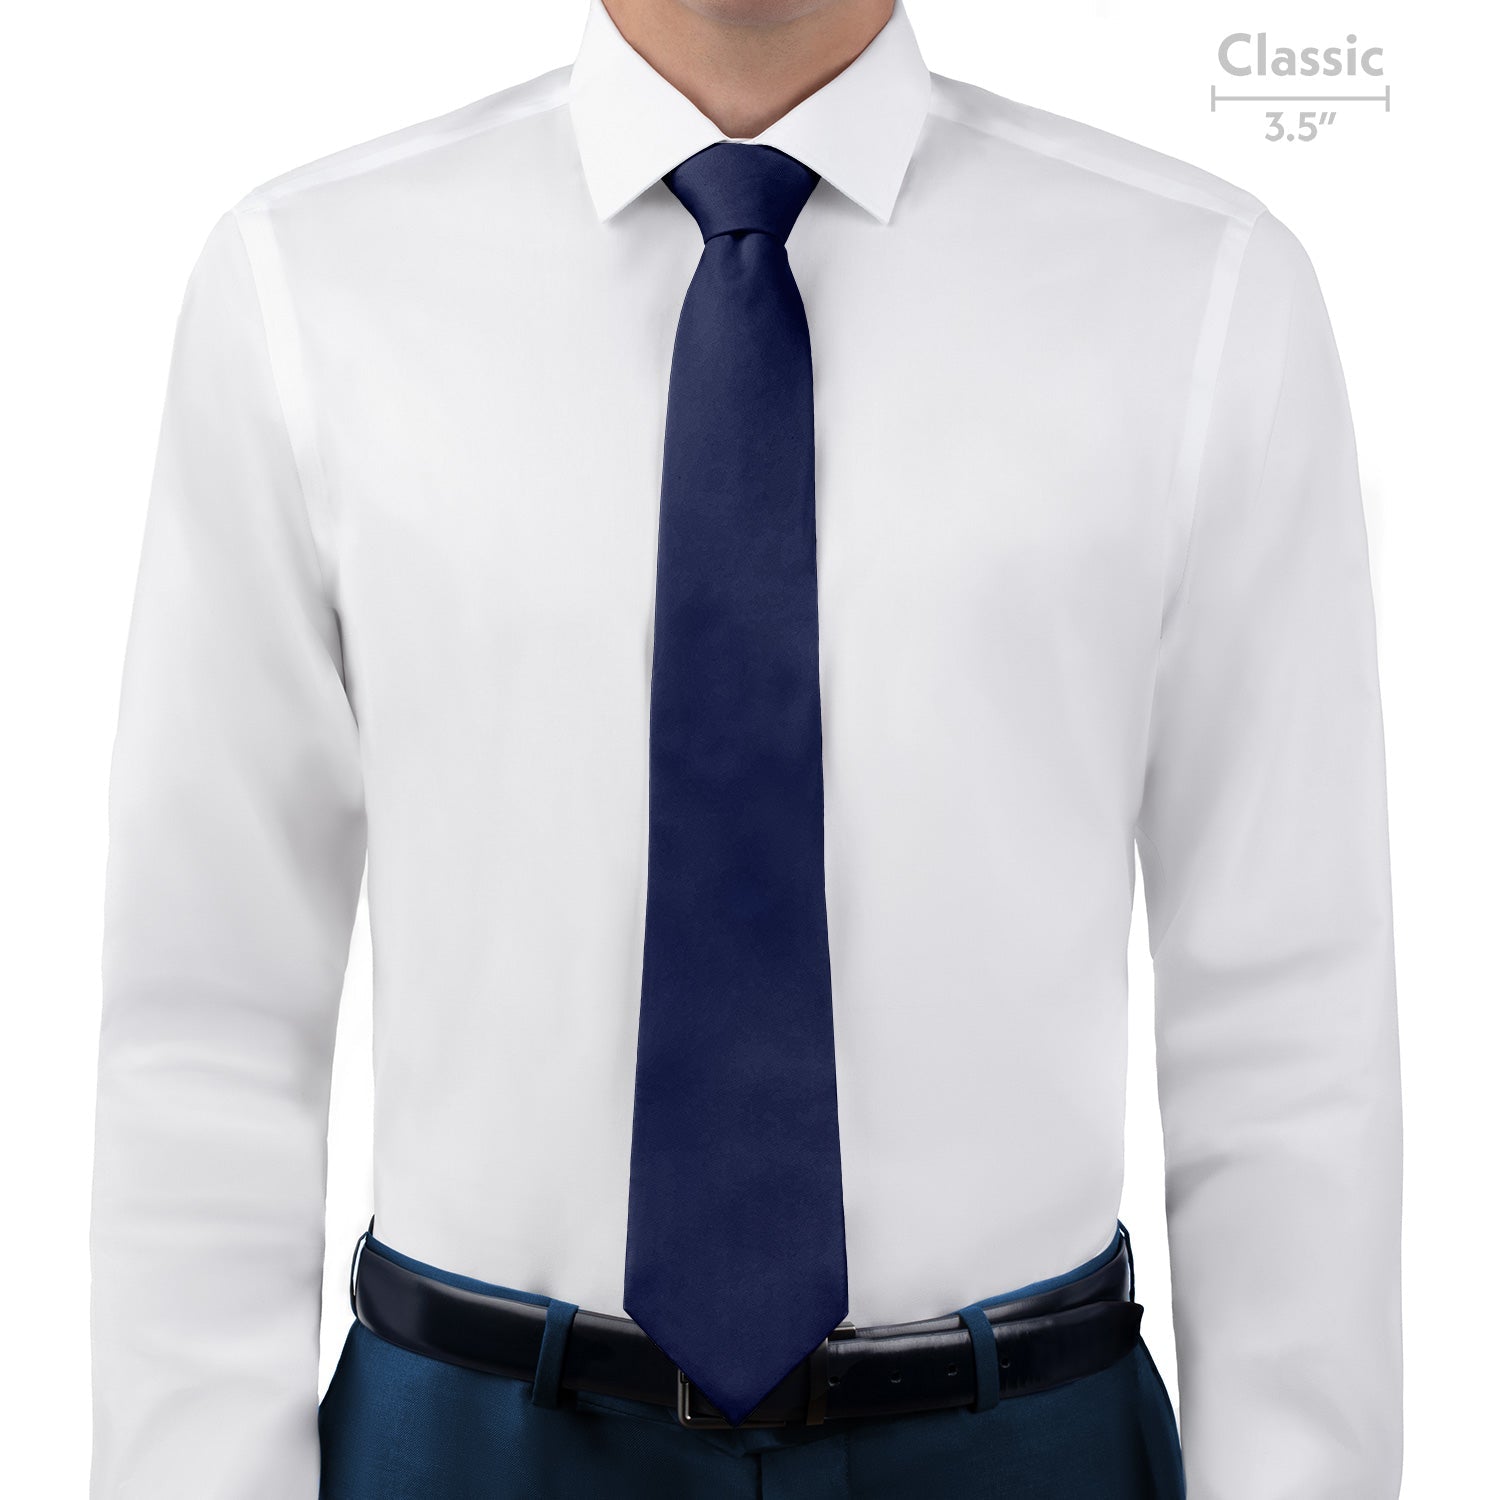 Solid KT Navy Necktie - Classic - Knotty Tie Co.